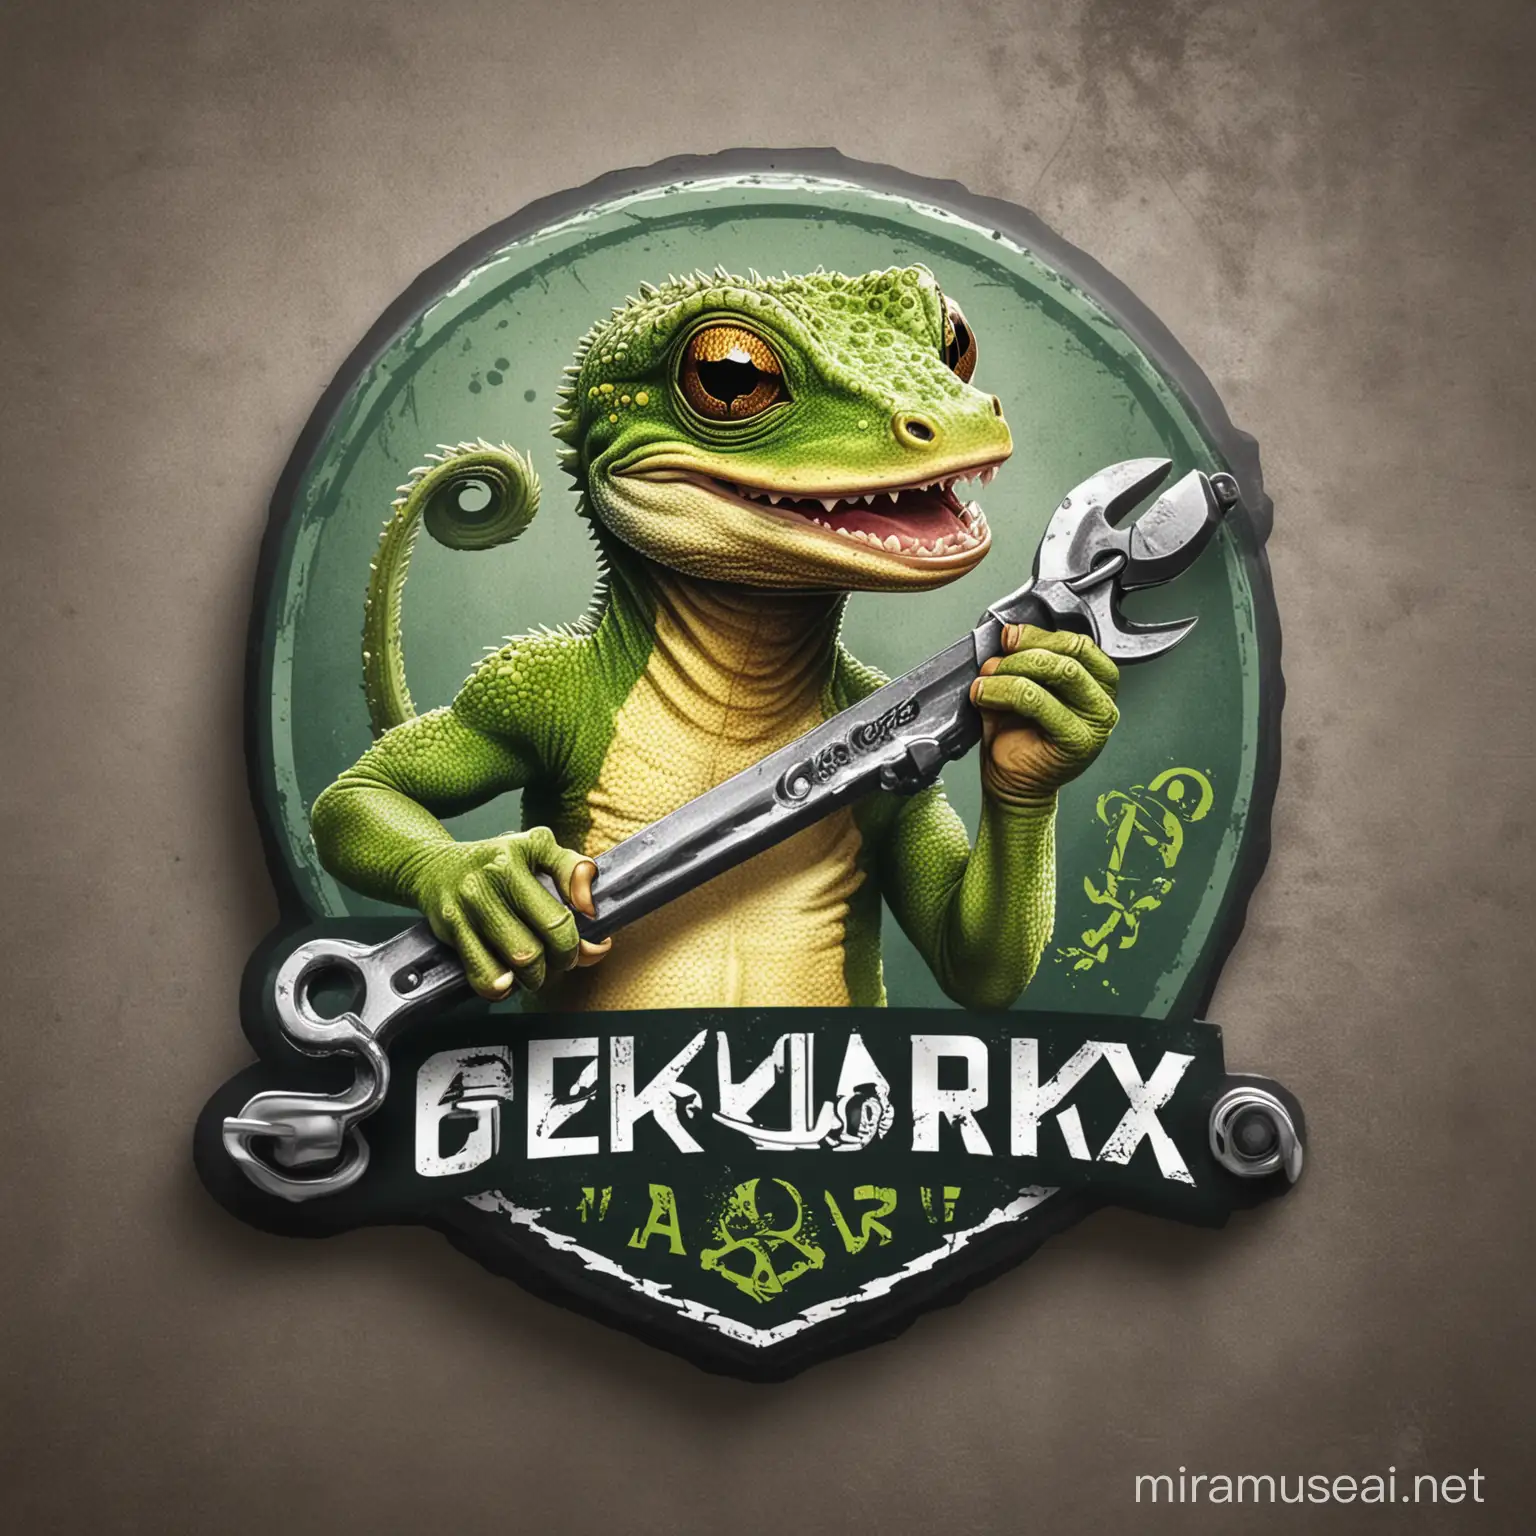 Gecko worx garage logo
With a gecko holding a wrench
